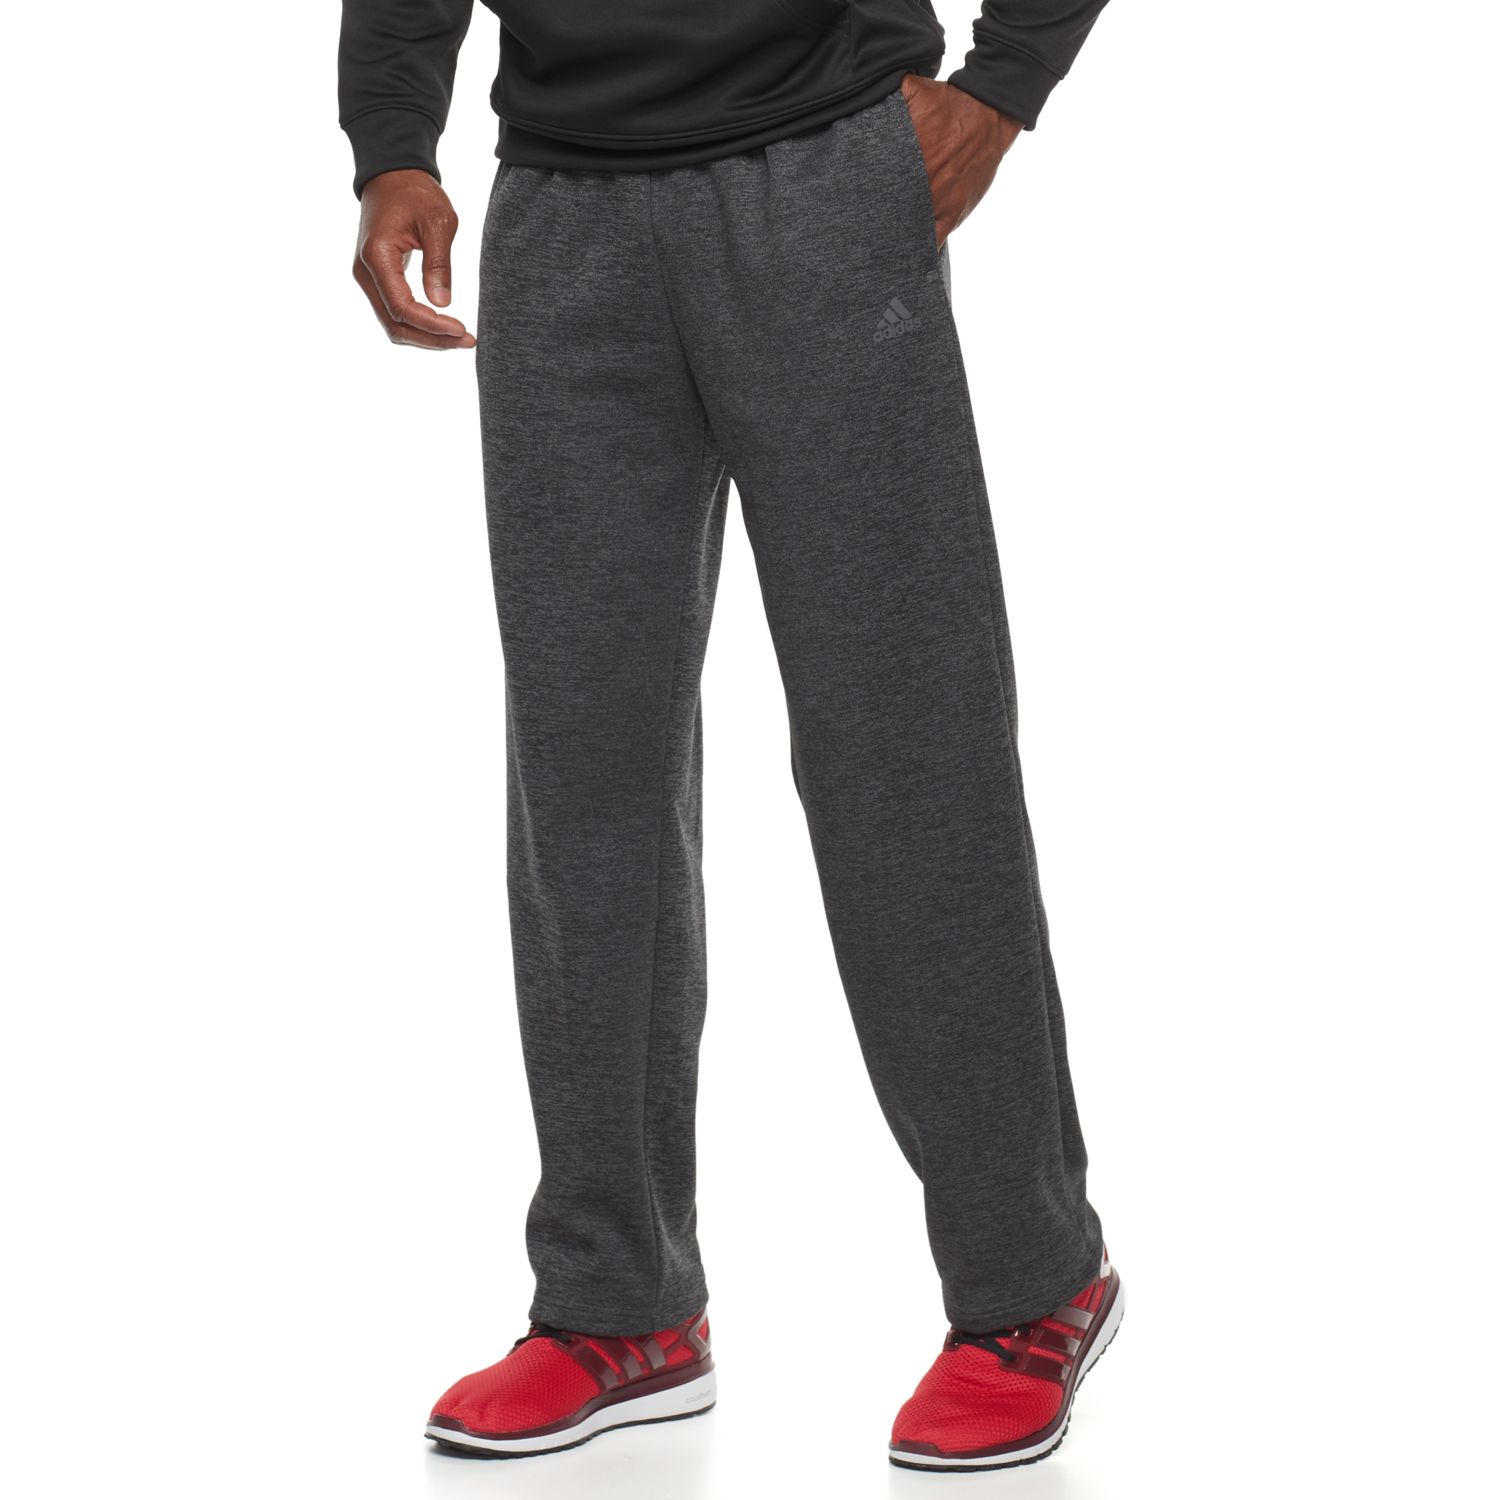 men's adidas team issue fleece pants